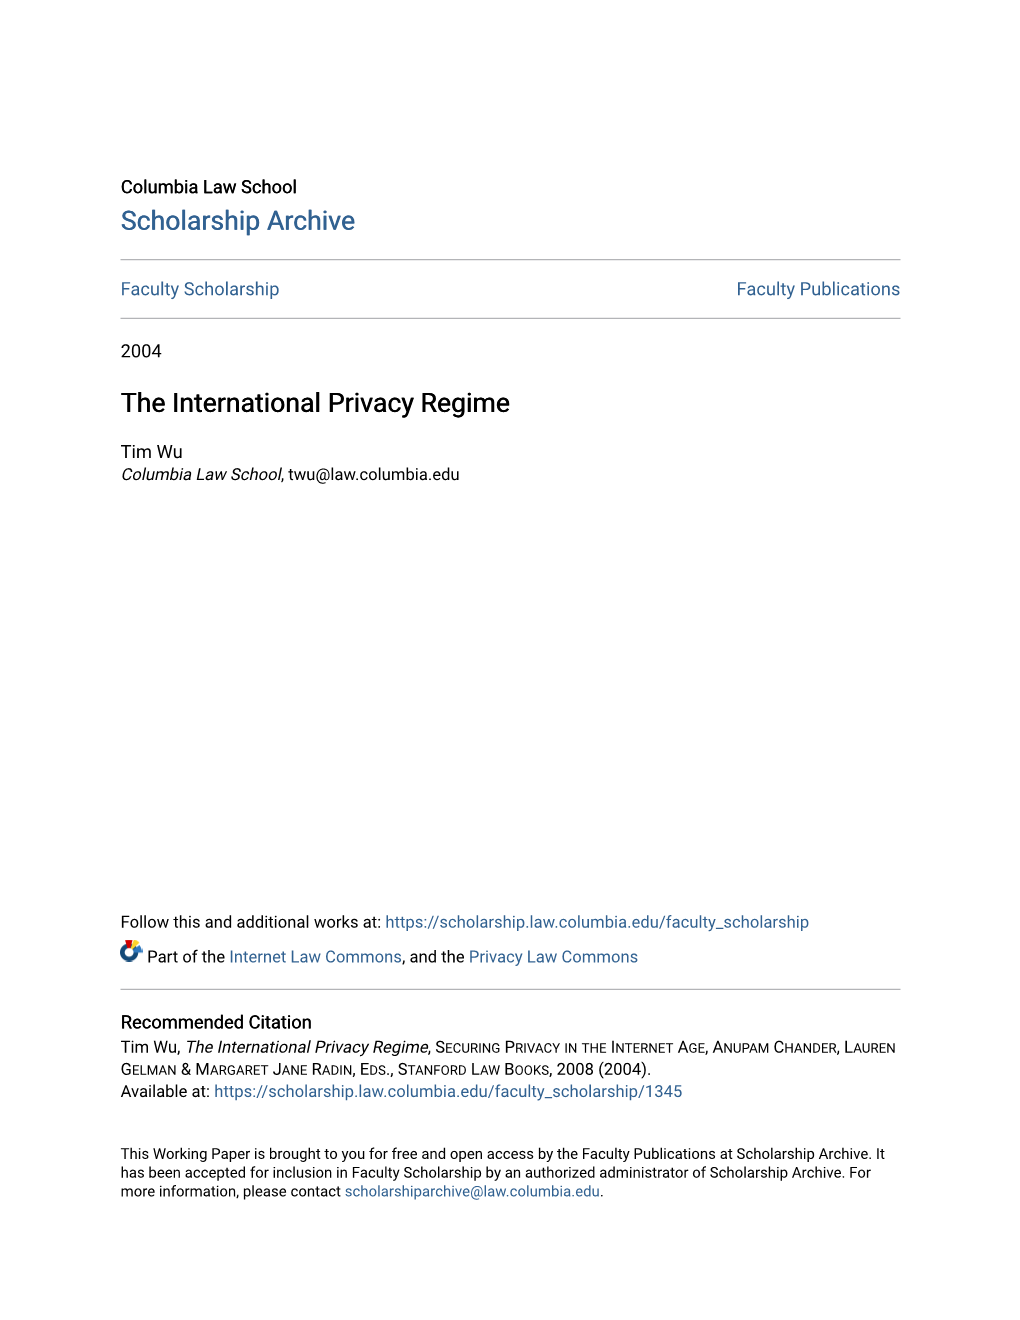 The International Privacy Regime